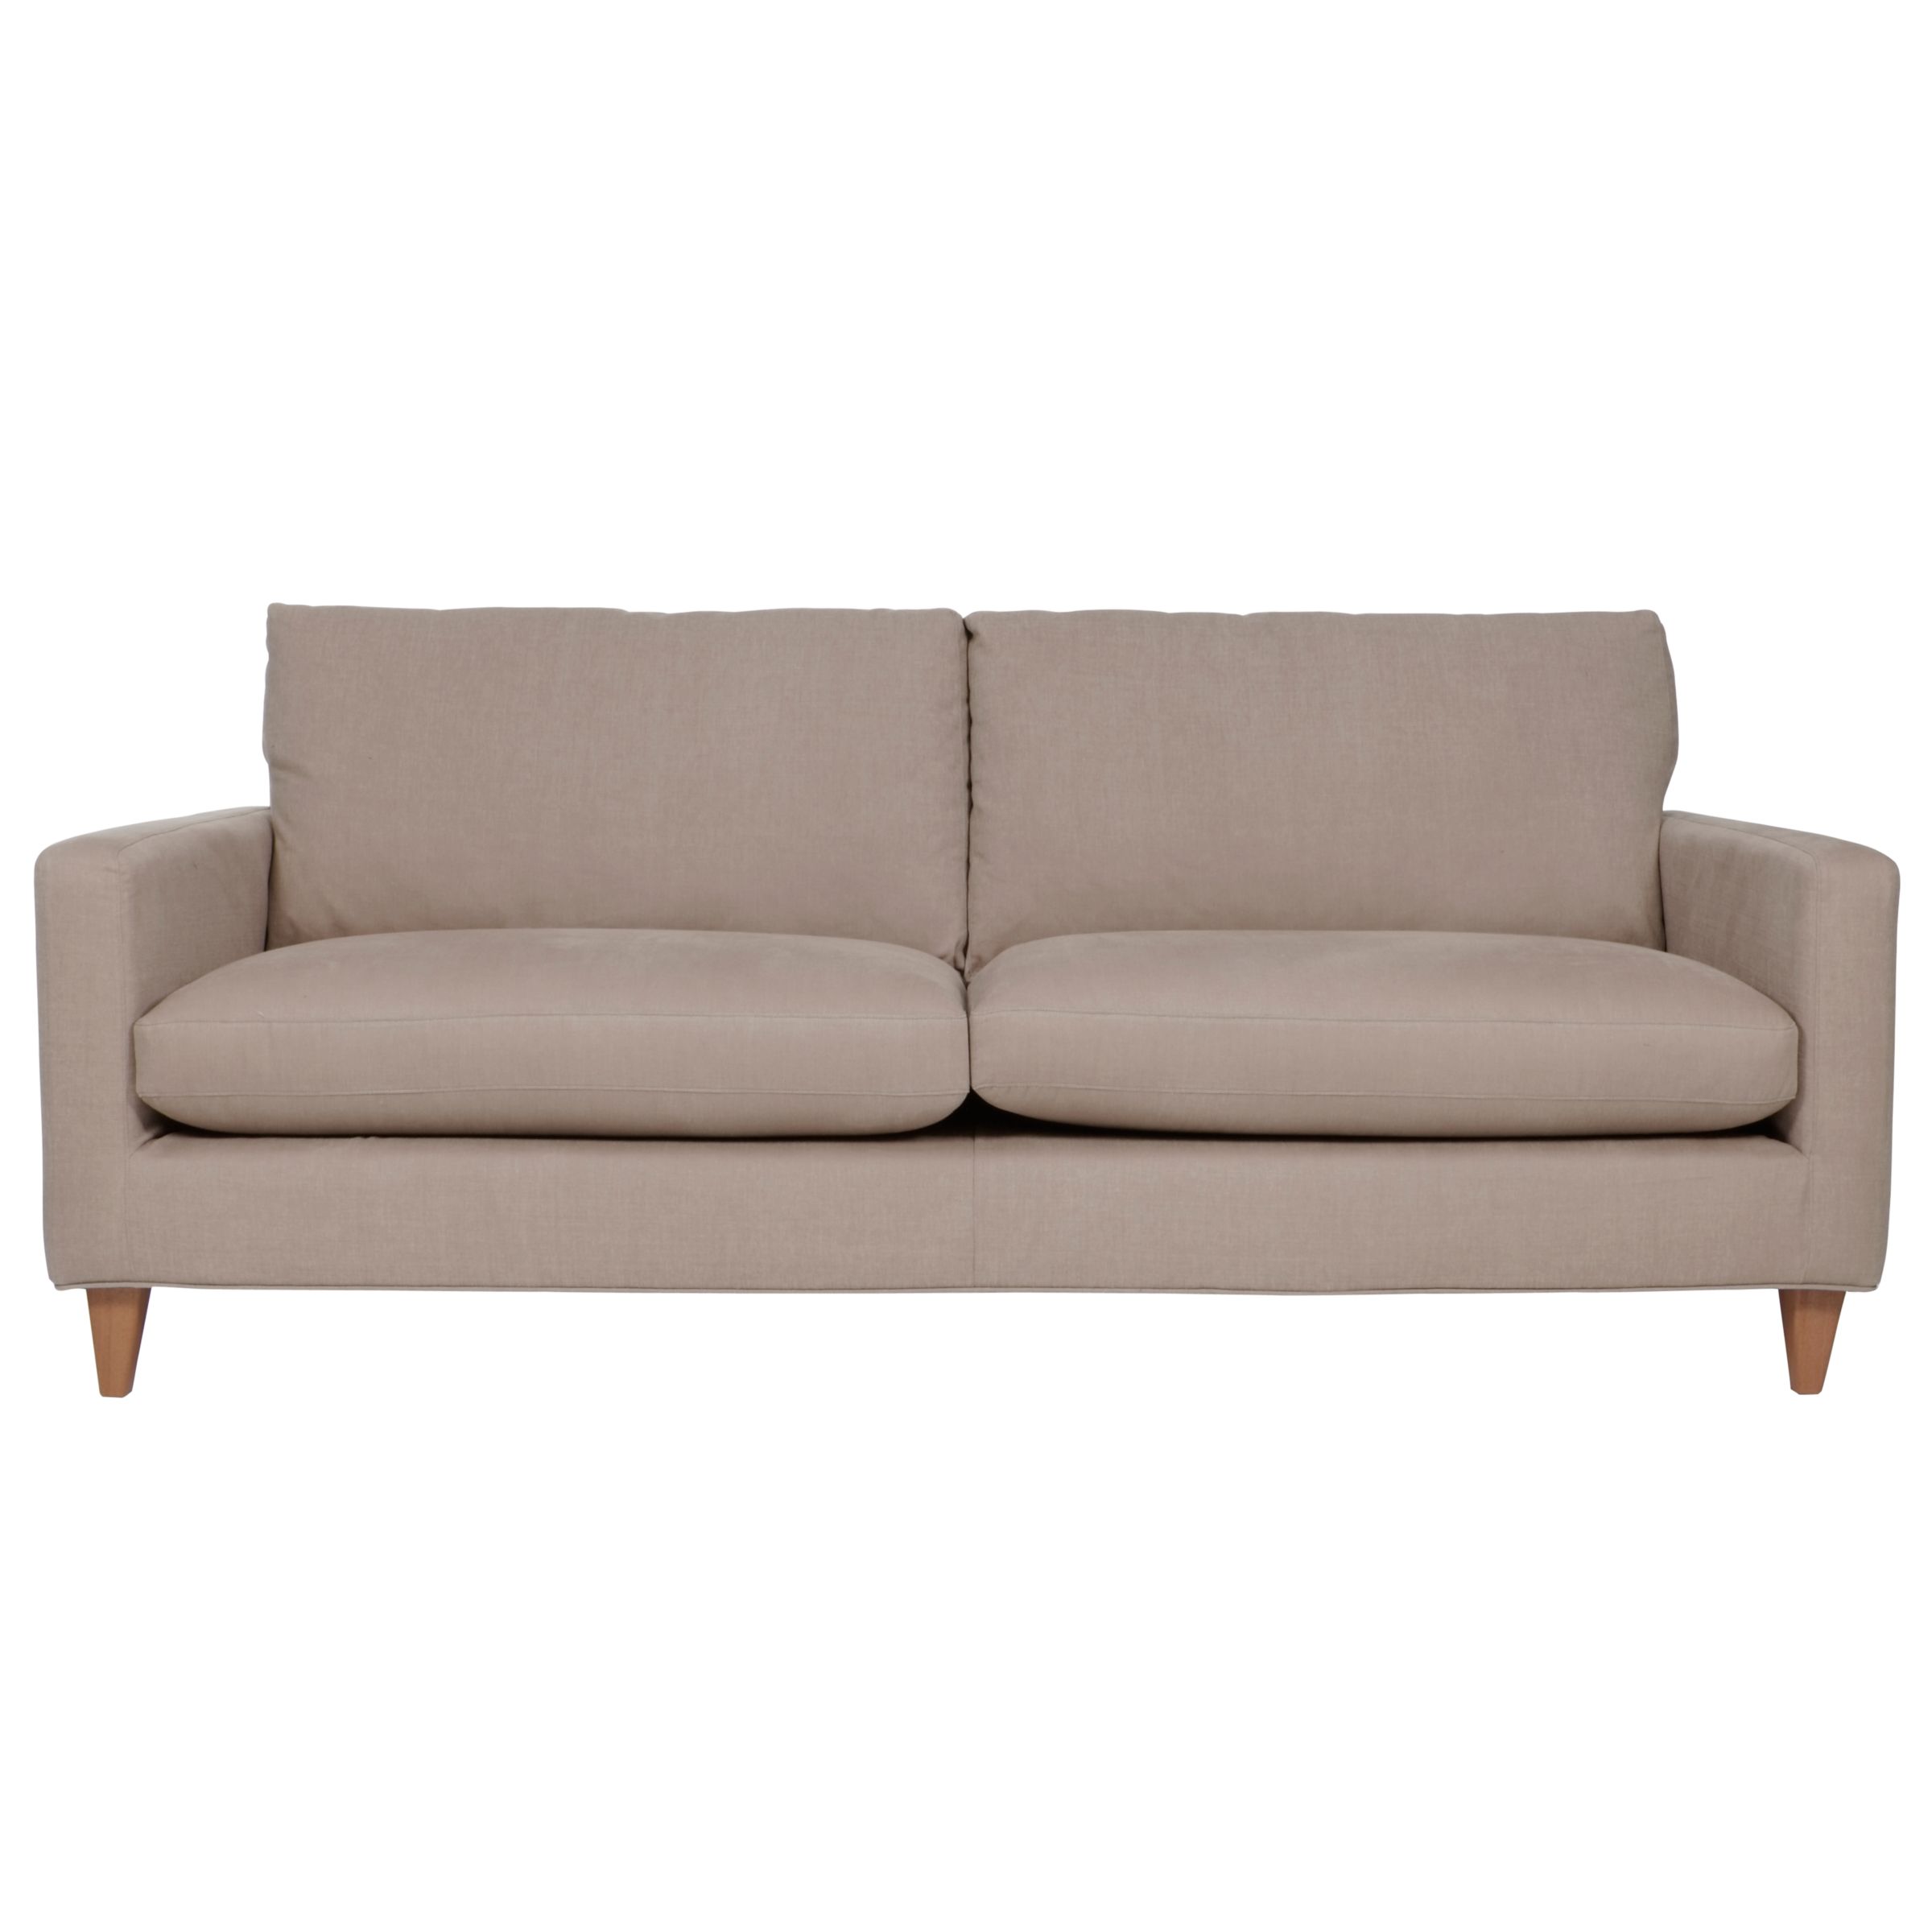 John Lewis Bailey Grand Sofa, Mink, width 214cm